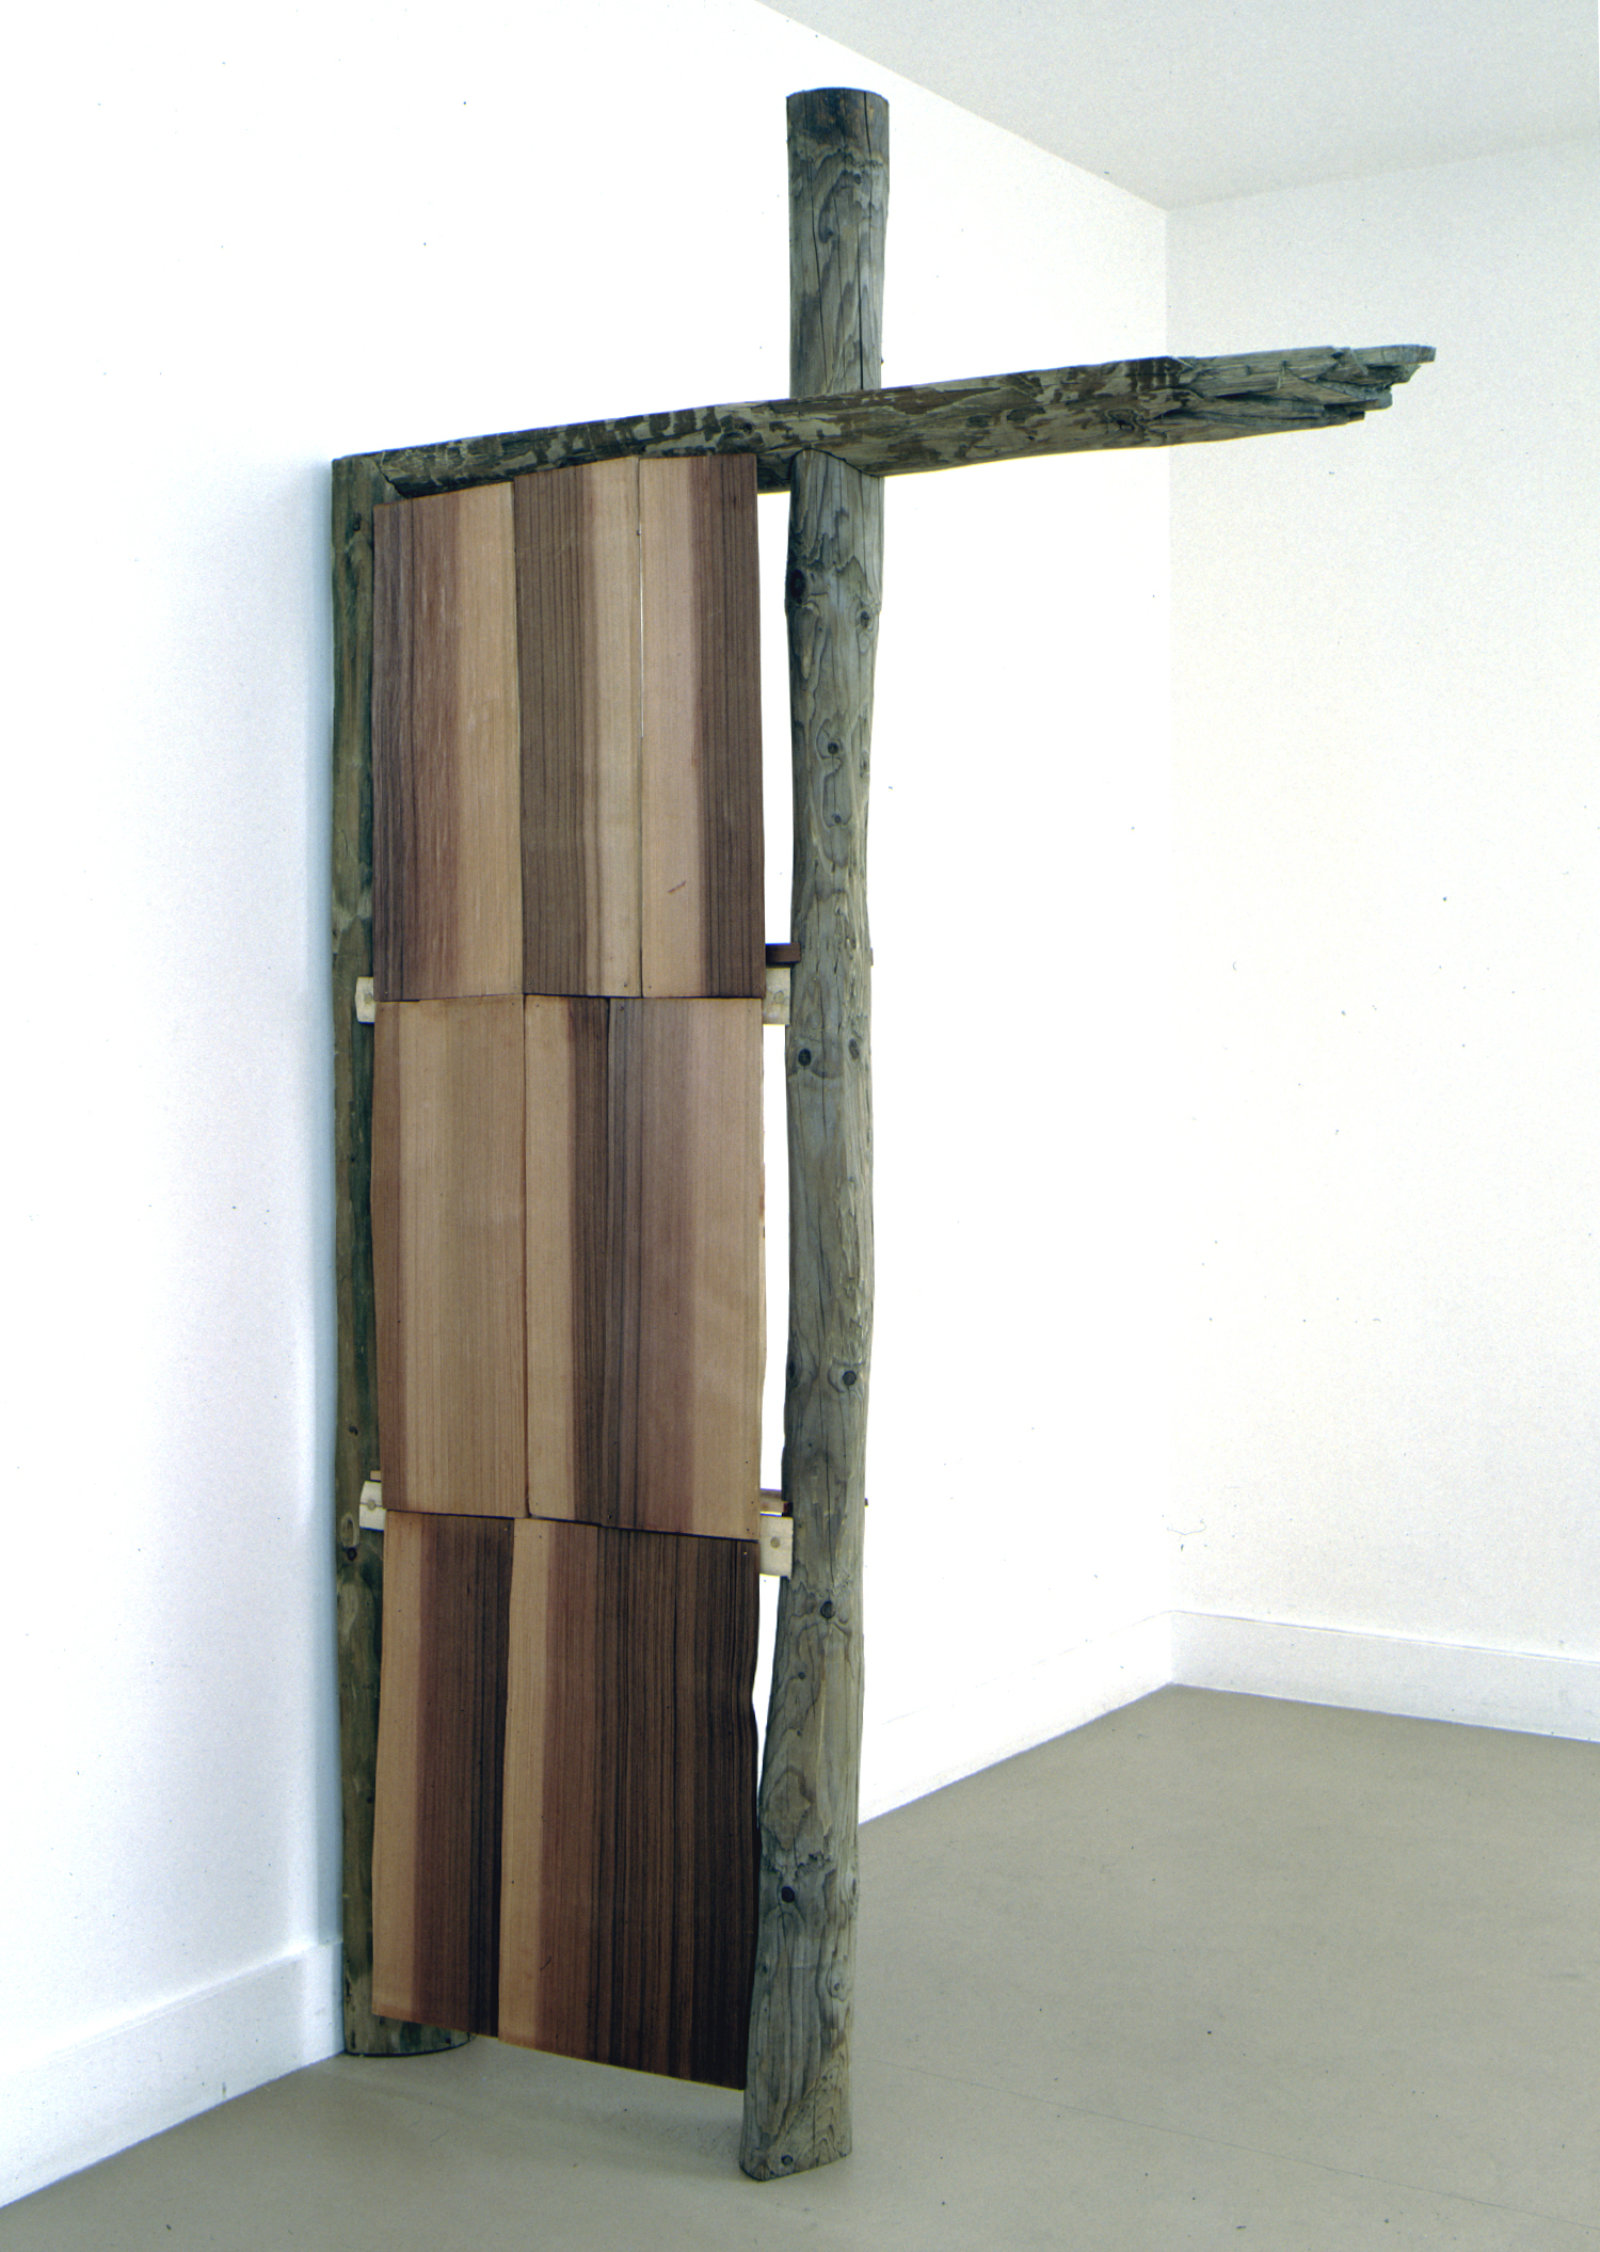 Christina Mackie, Where, 1998, larch, cedar, frames, pinhole camera, flat monitor, copper, mirror, 91 x 54 x 8 in. (230 x 138 x 20 cm)